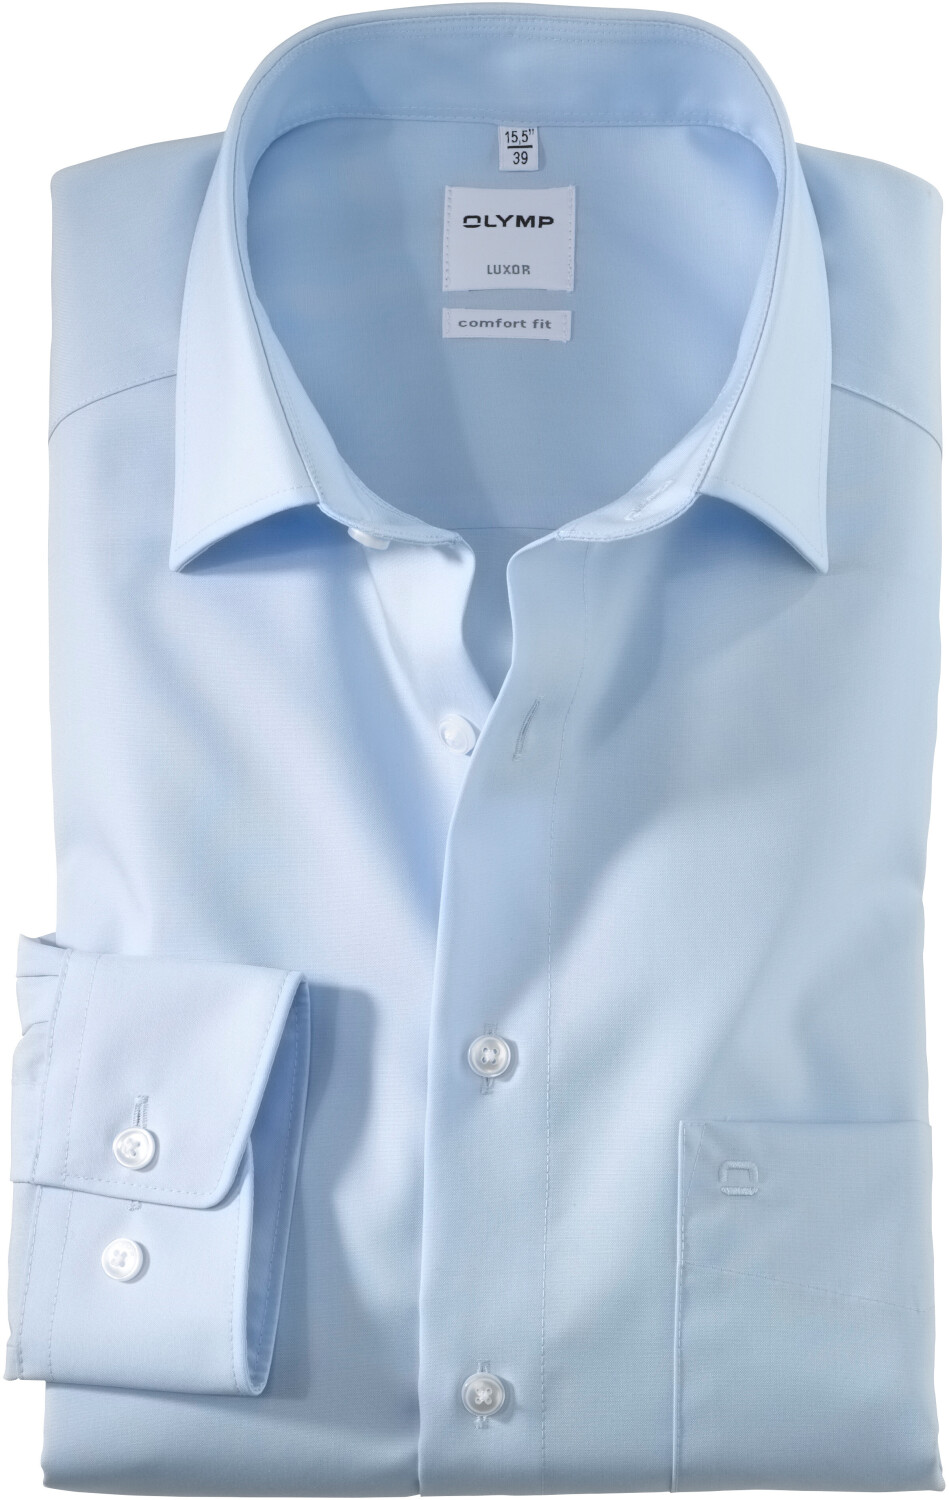 OLYMP Luxor Hemd Comfort Fit extra kurzer Arm blau (25458-15) ab 59,95 € |  Preisvergleich bei